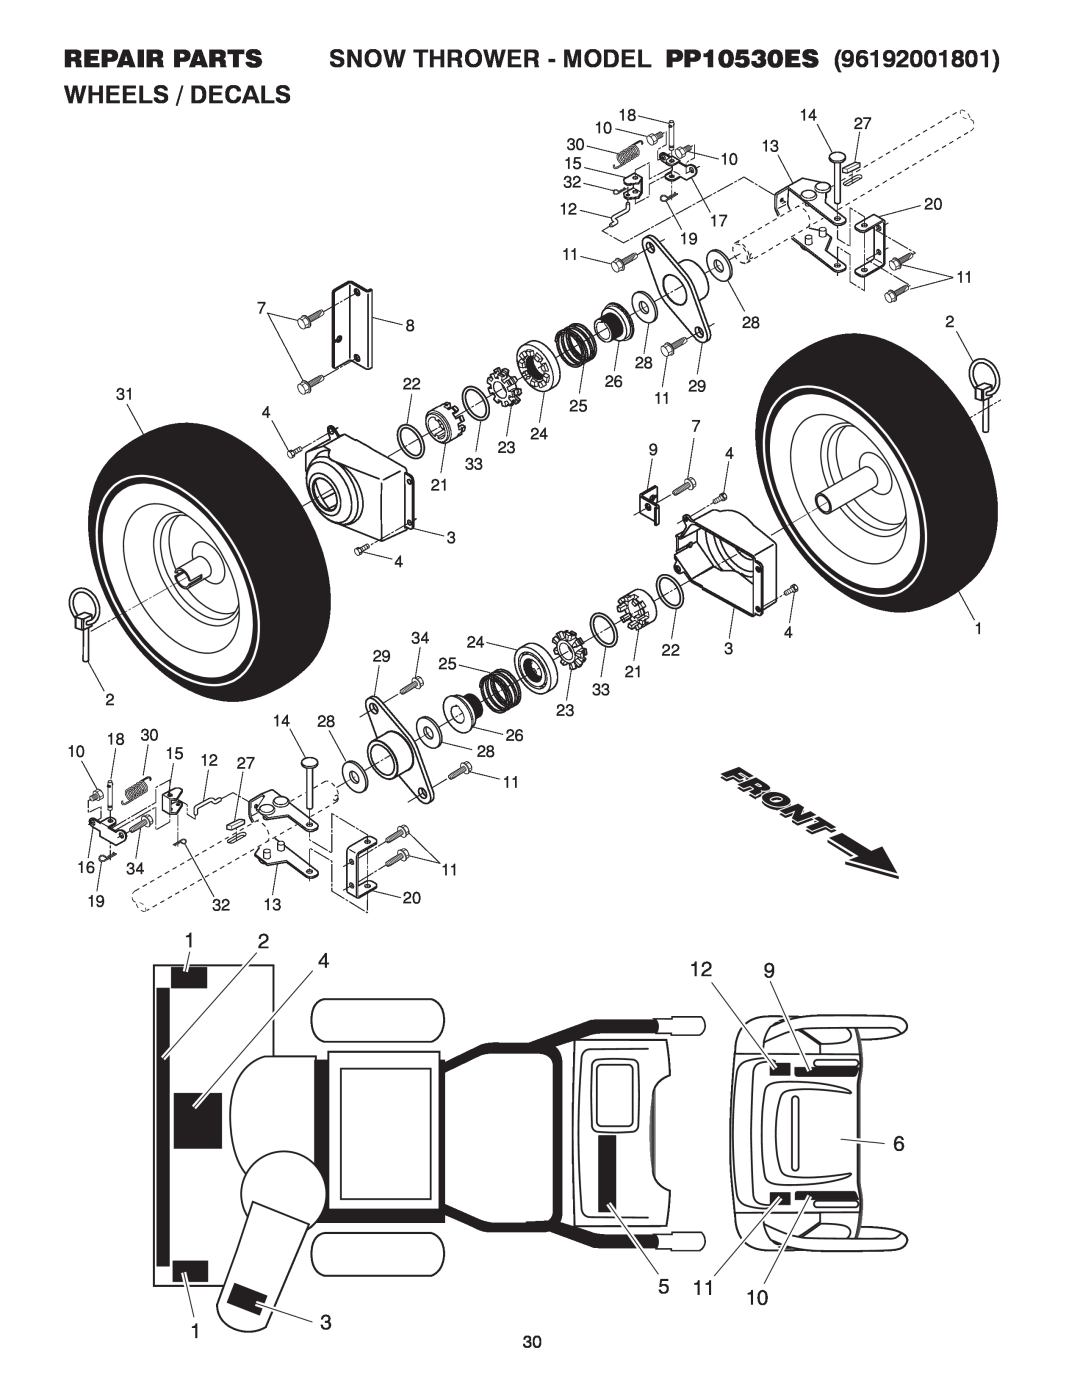 Poulan 415244, 96192001801 owner manual SNOW THROWER - MODEL PP10530ES, Repair Parts Wheels / Decals, 5 11 3 